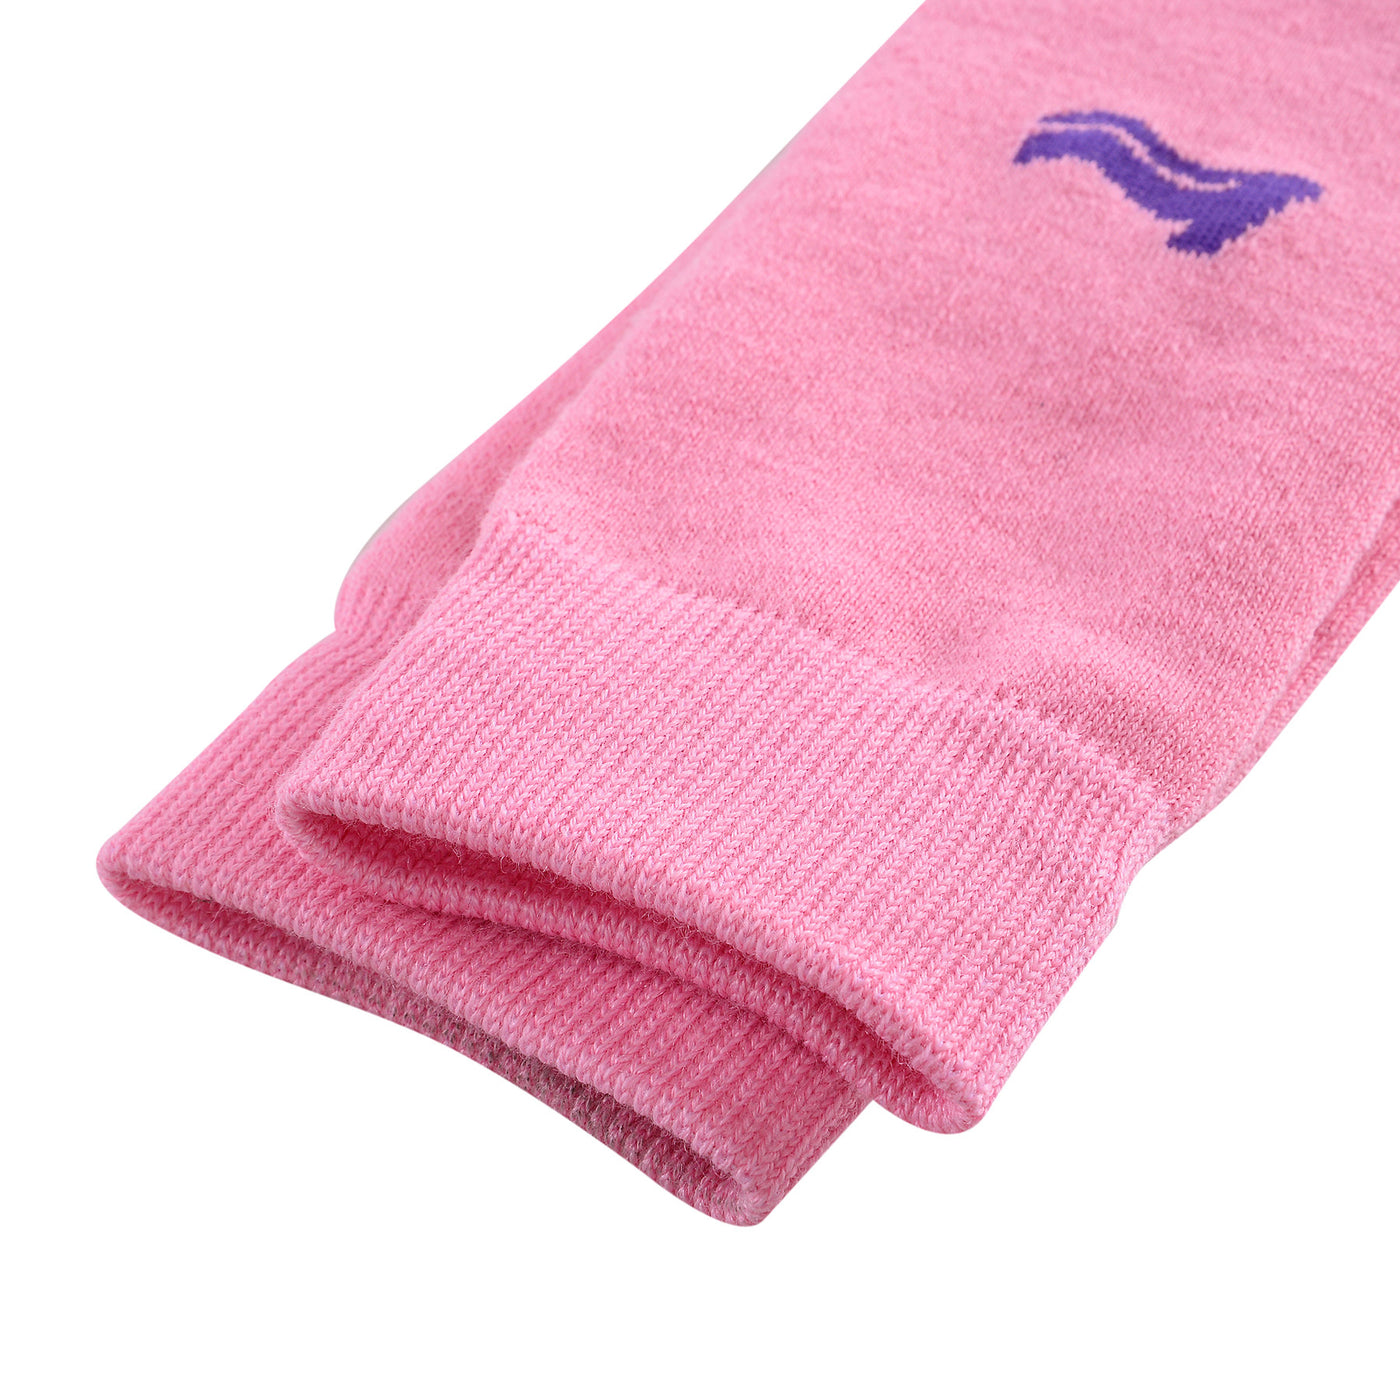 Laulax Ladies 2 Pairs High Quality Merino Wool Ski Socks, Gift Set, Size UK 3 - 7 / Europe 36 - 40, Black, Pink